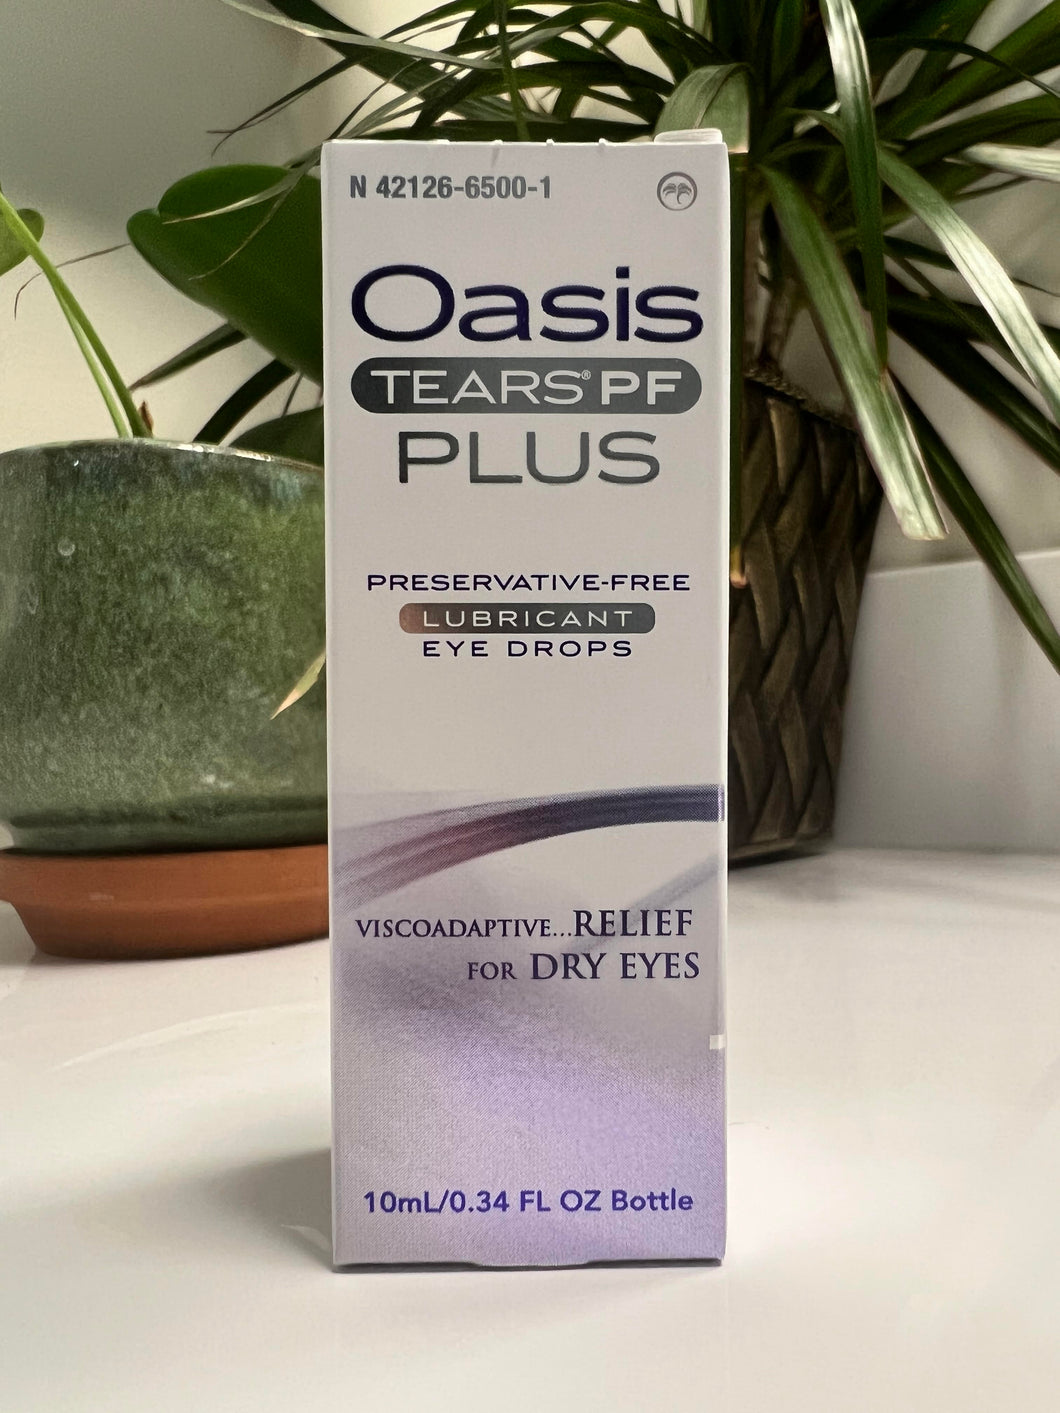 Oasis Tears PF Plus Preservative-Free Lubricant Eye Drops (10mL)